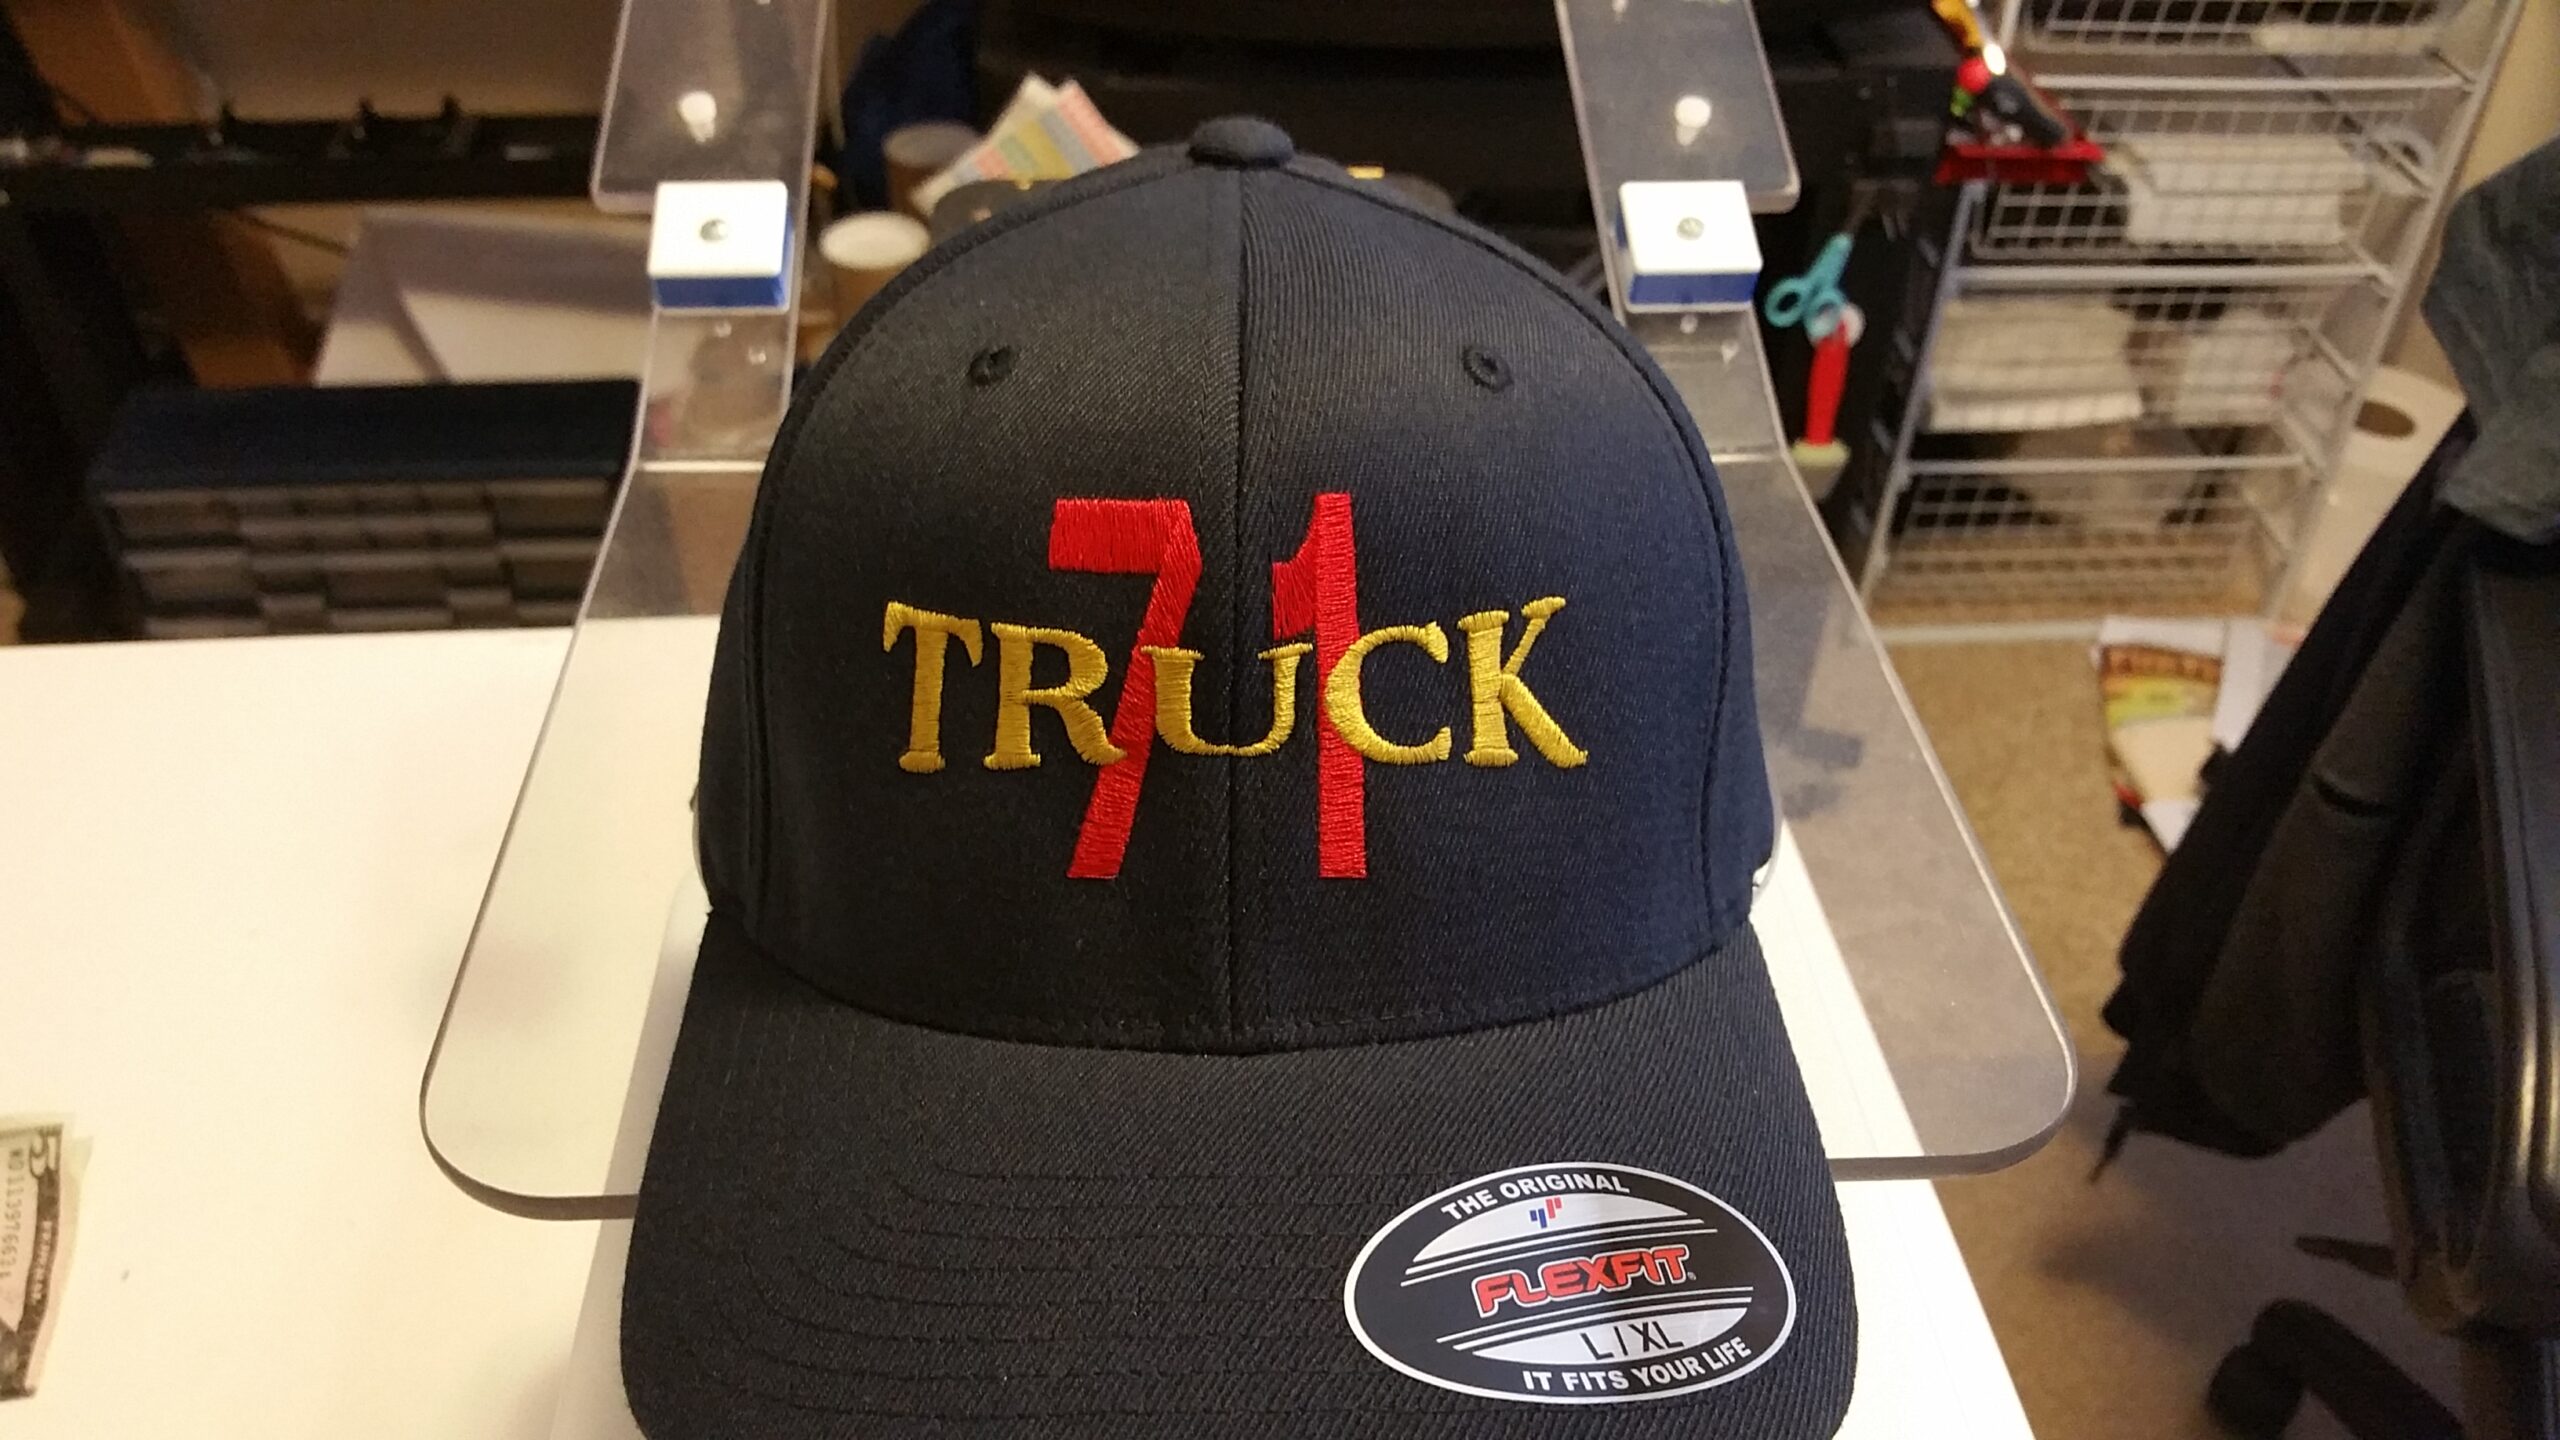 Truck 71